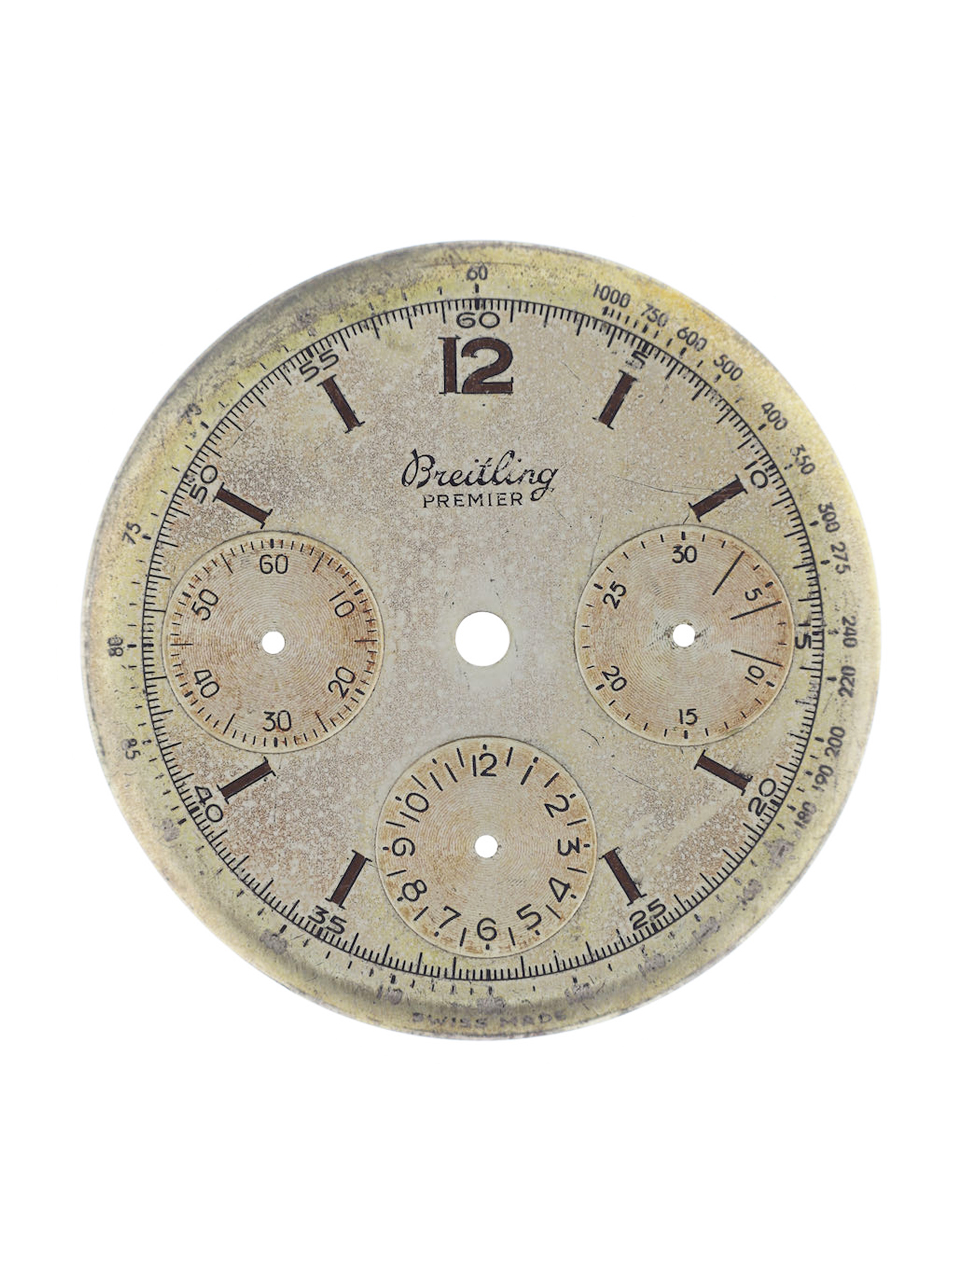 Breitling Venus 152 Chronograph 1950s - Gisbert A. Joseph Watches